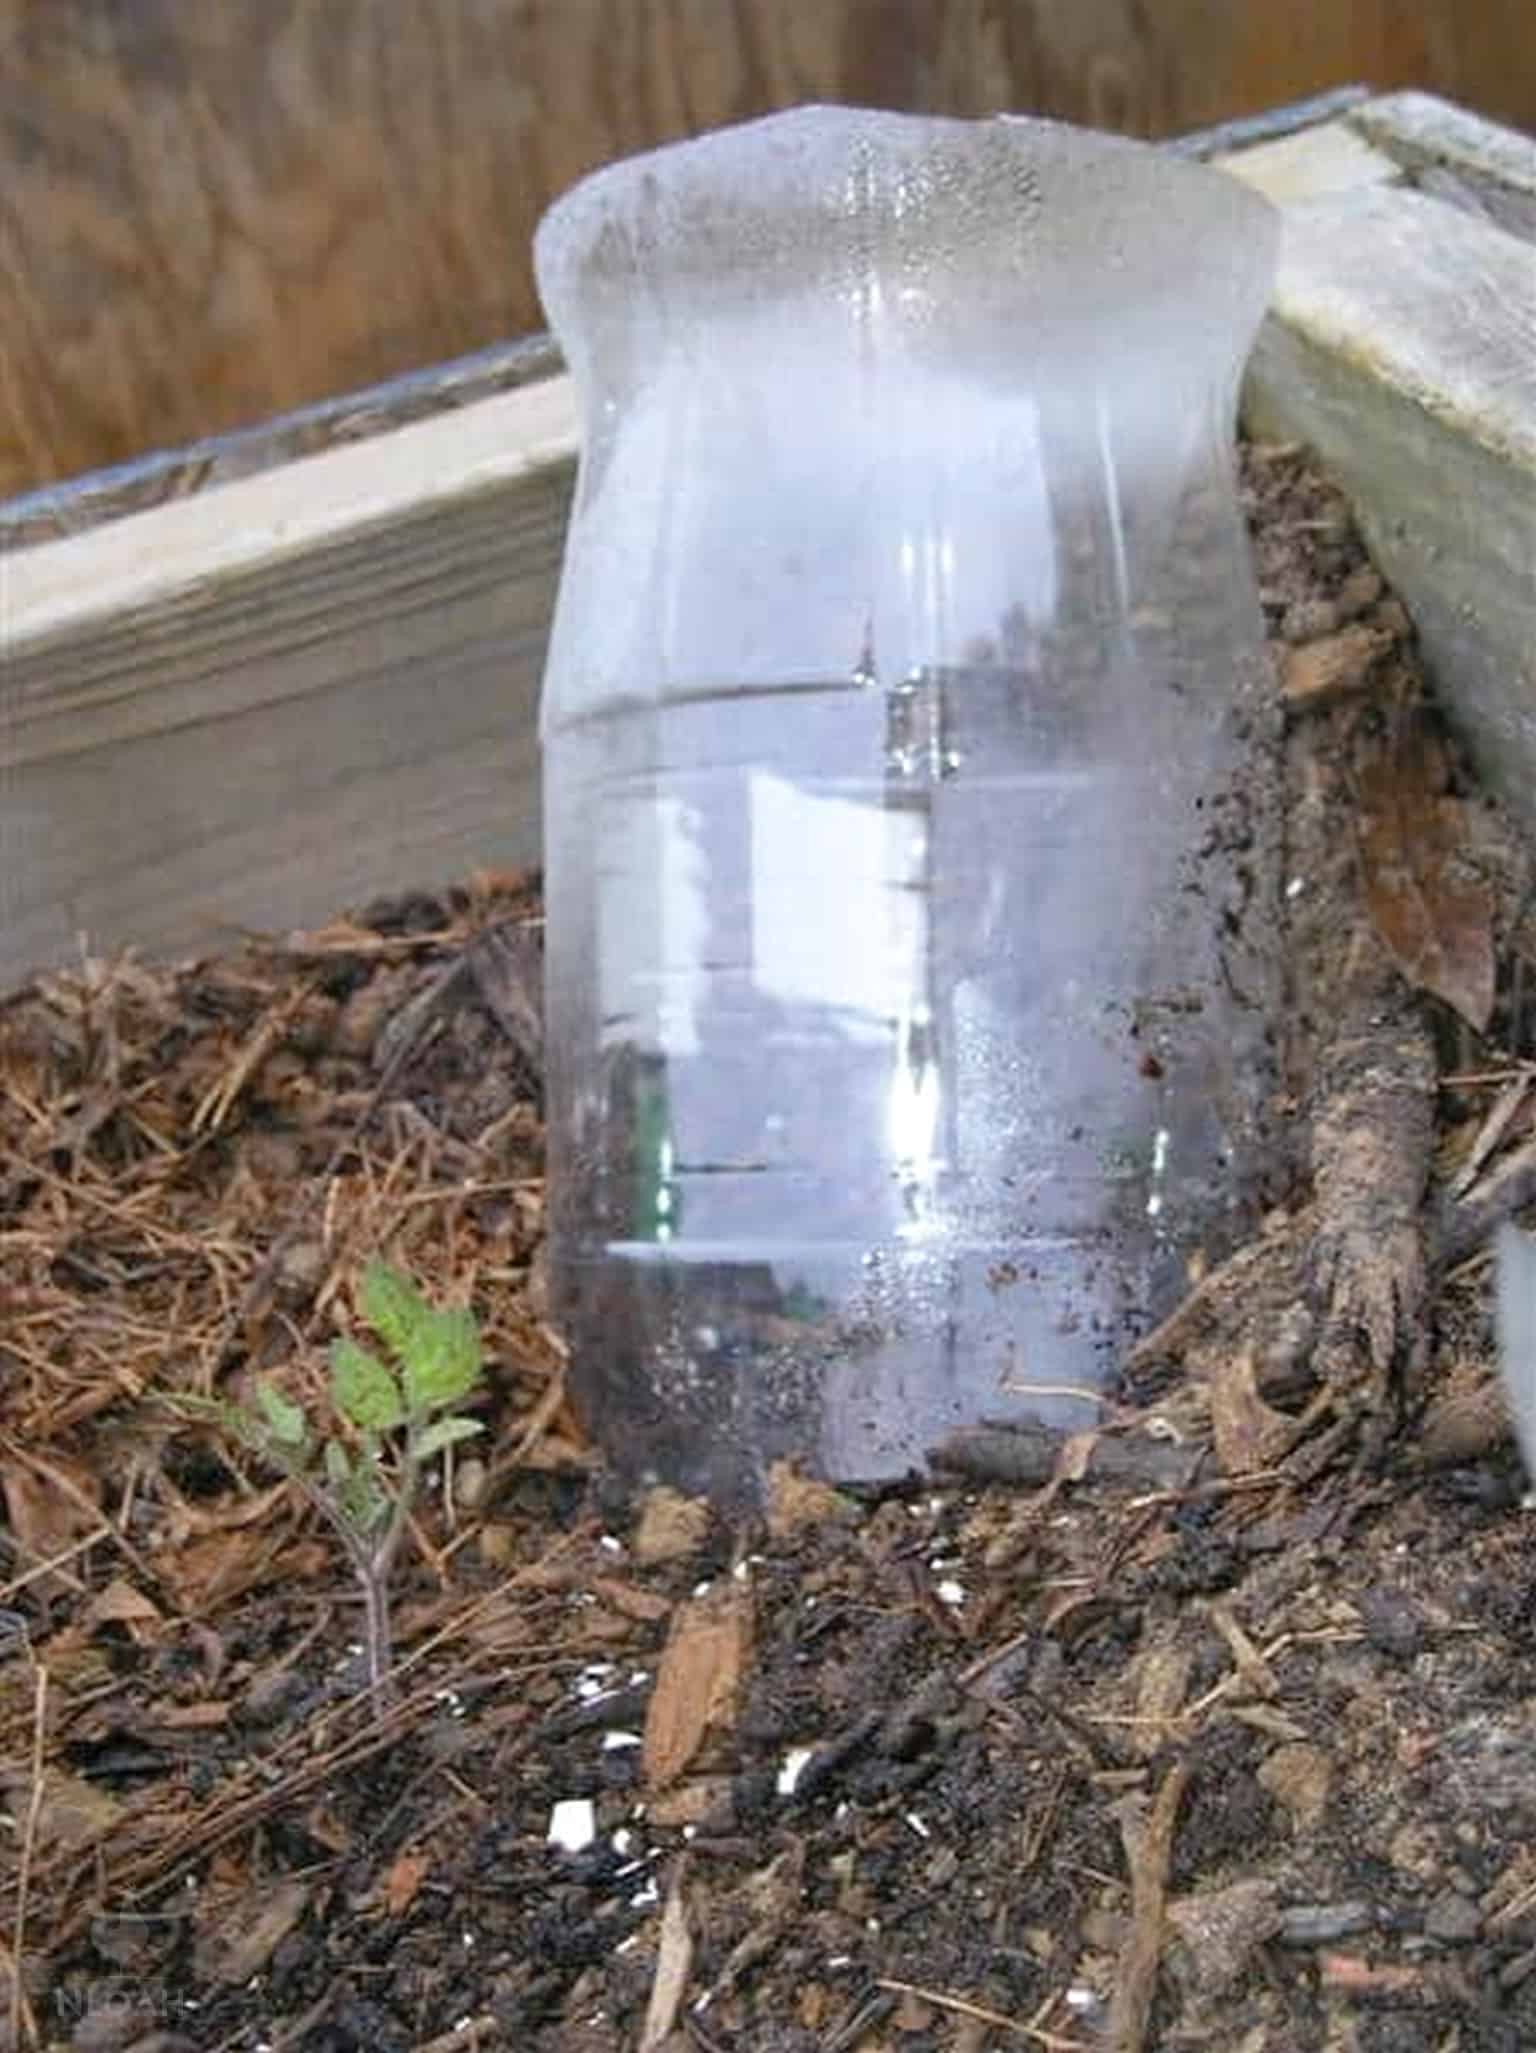 drip irrigation plastic bottle in raised bed